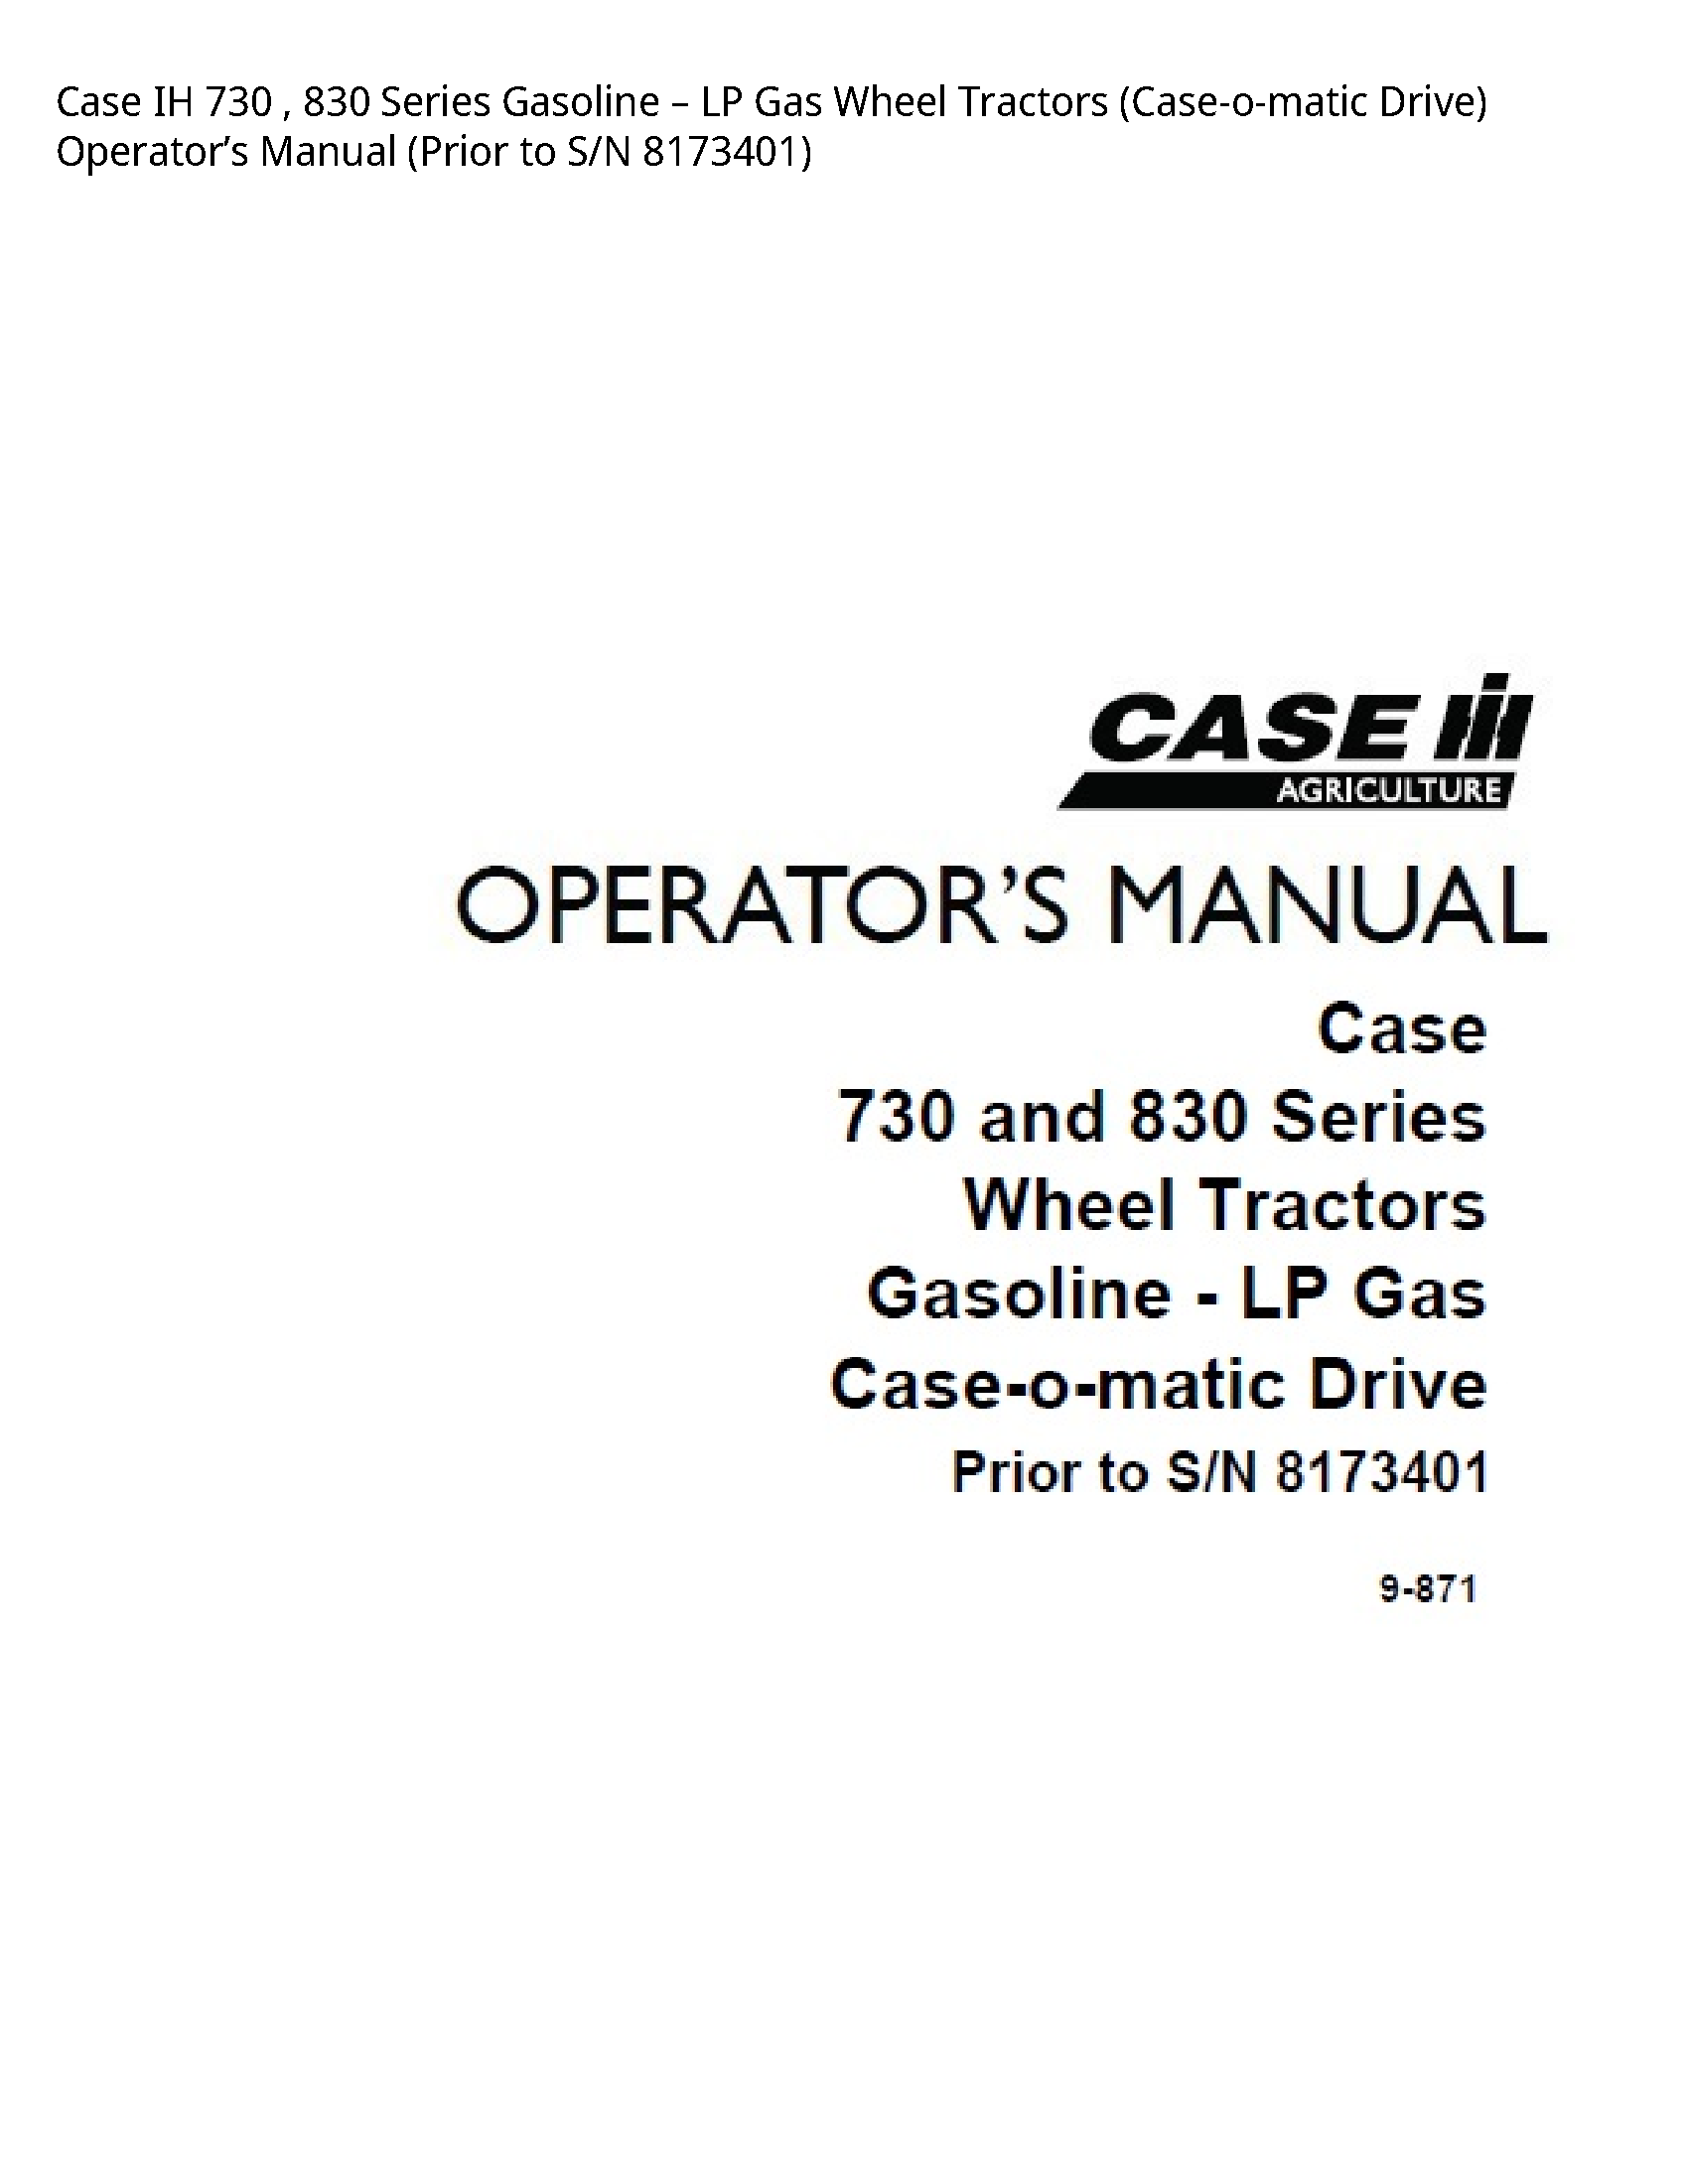 Case/Case IH 730 IH Series Gasoline LP Gas Wheel Tractors (Case-o-matic Drive) Operator’s manual